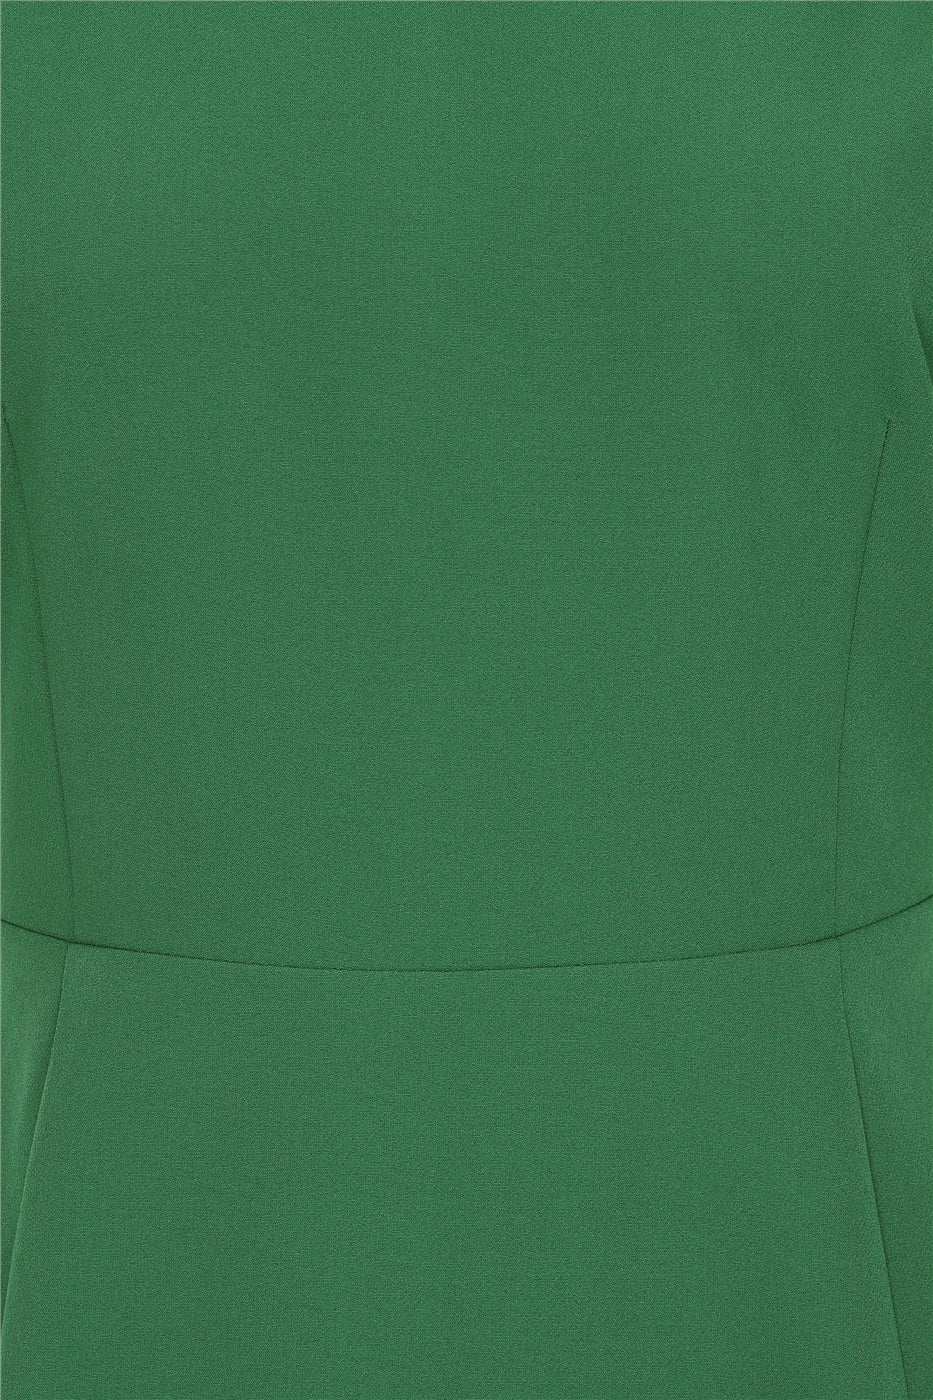 Arya Vintage Kleid grün